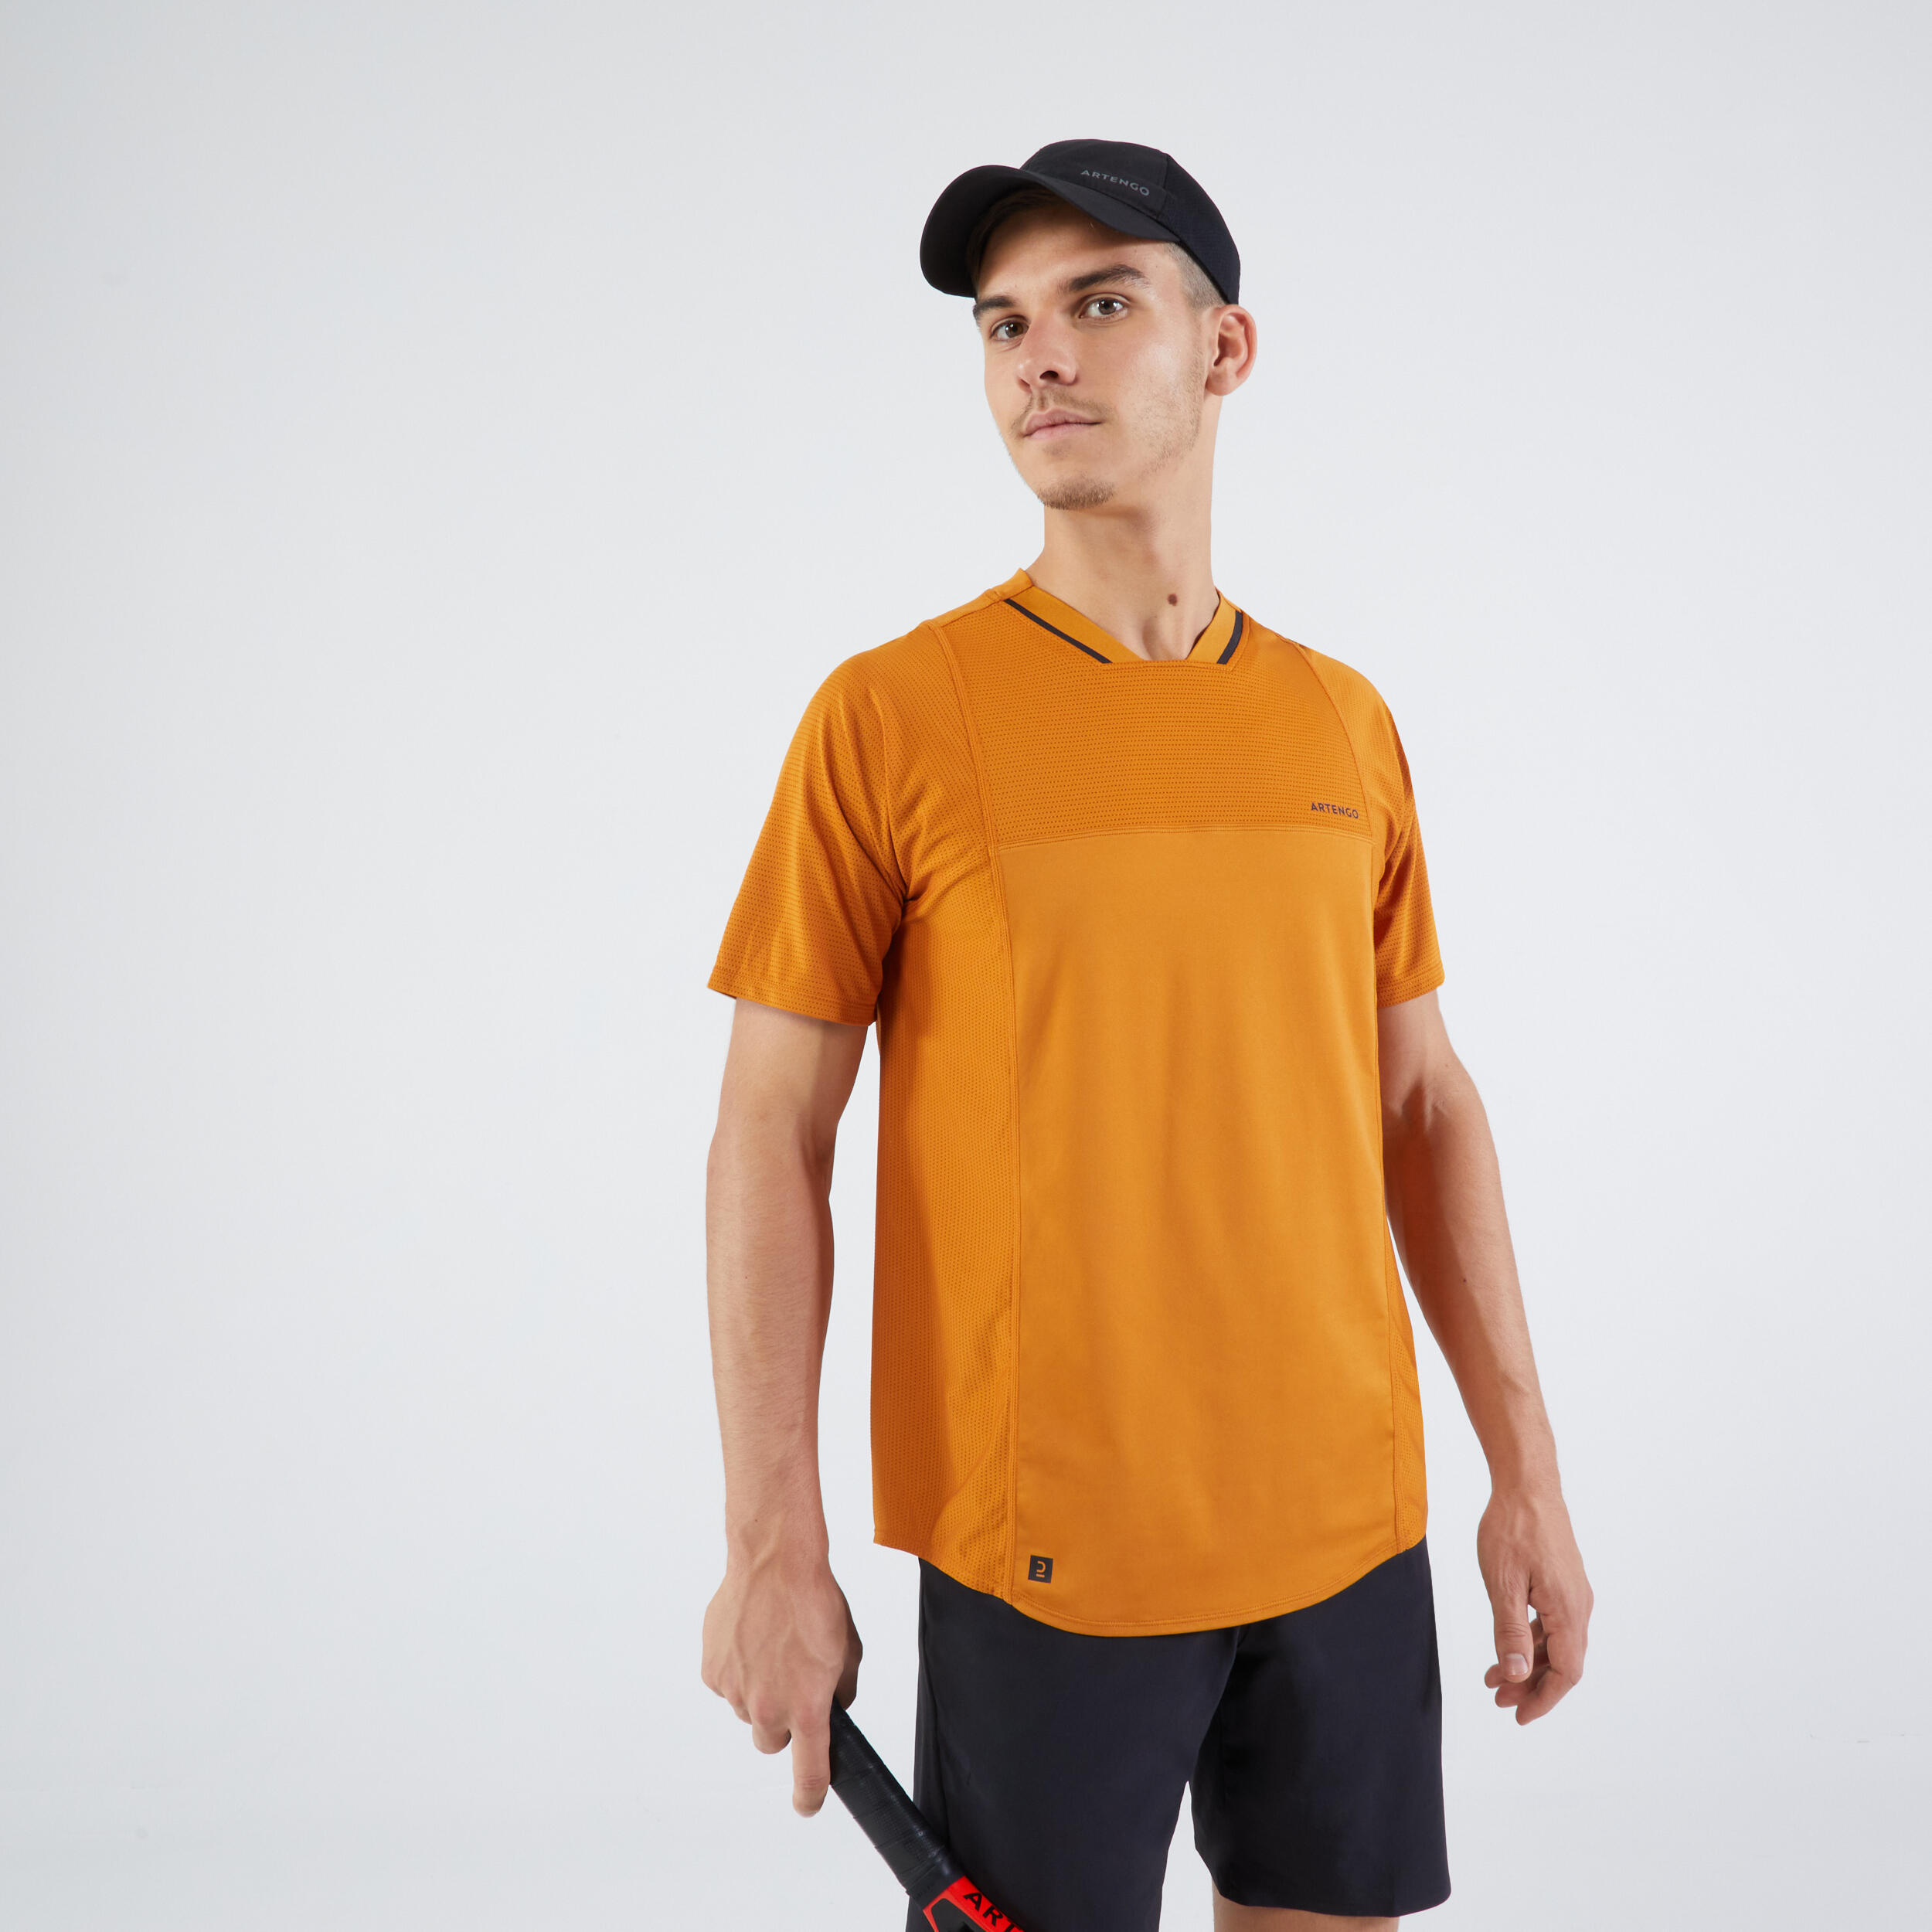 Теннисная футболка мужская - Dry VN охра/черная ARTENGO, охра черная люрекс 399fj охра